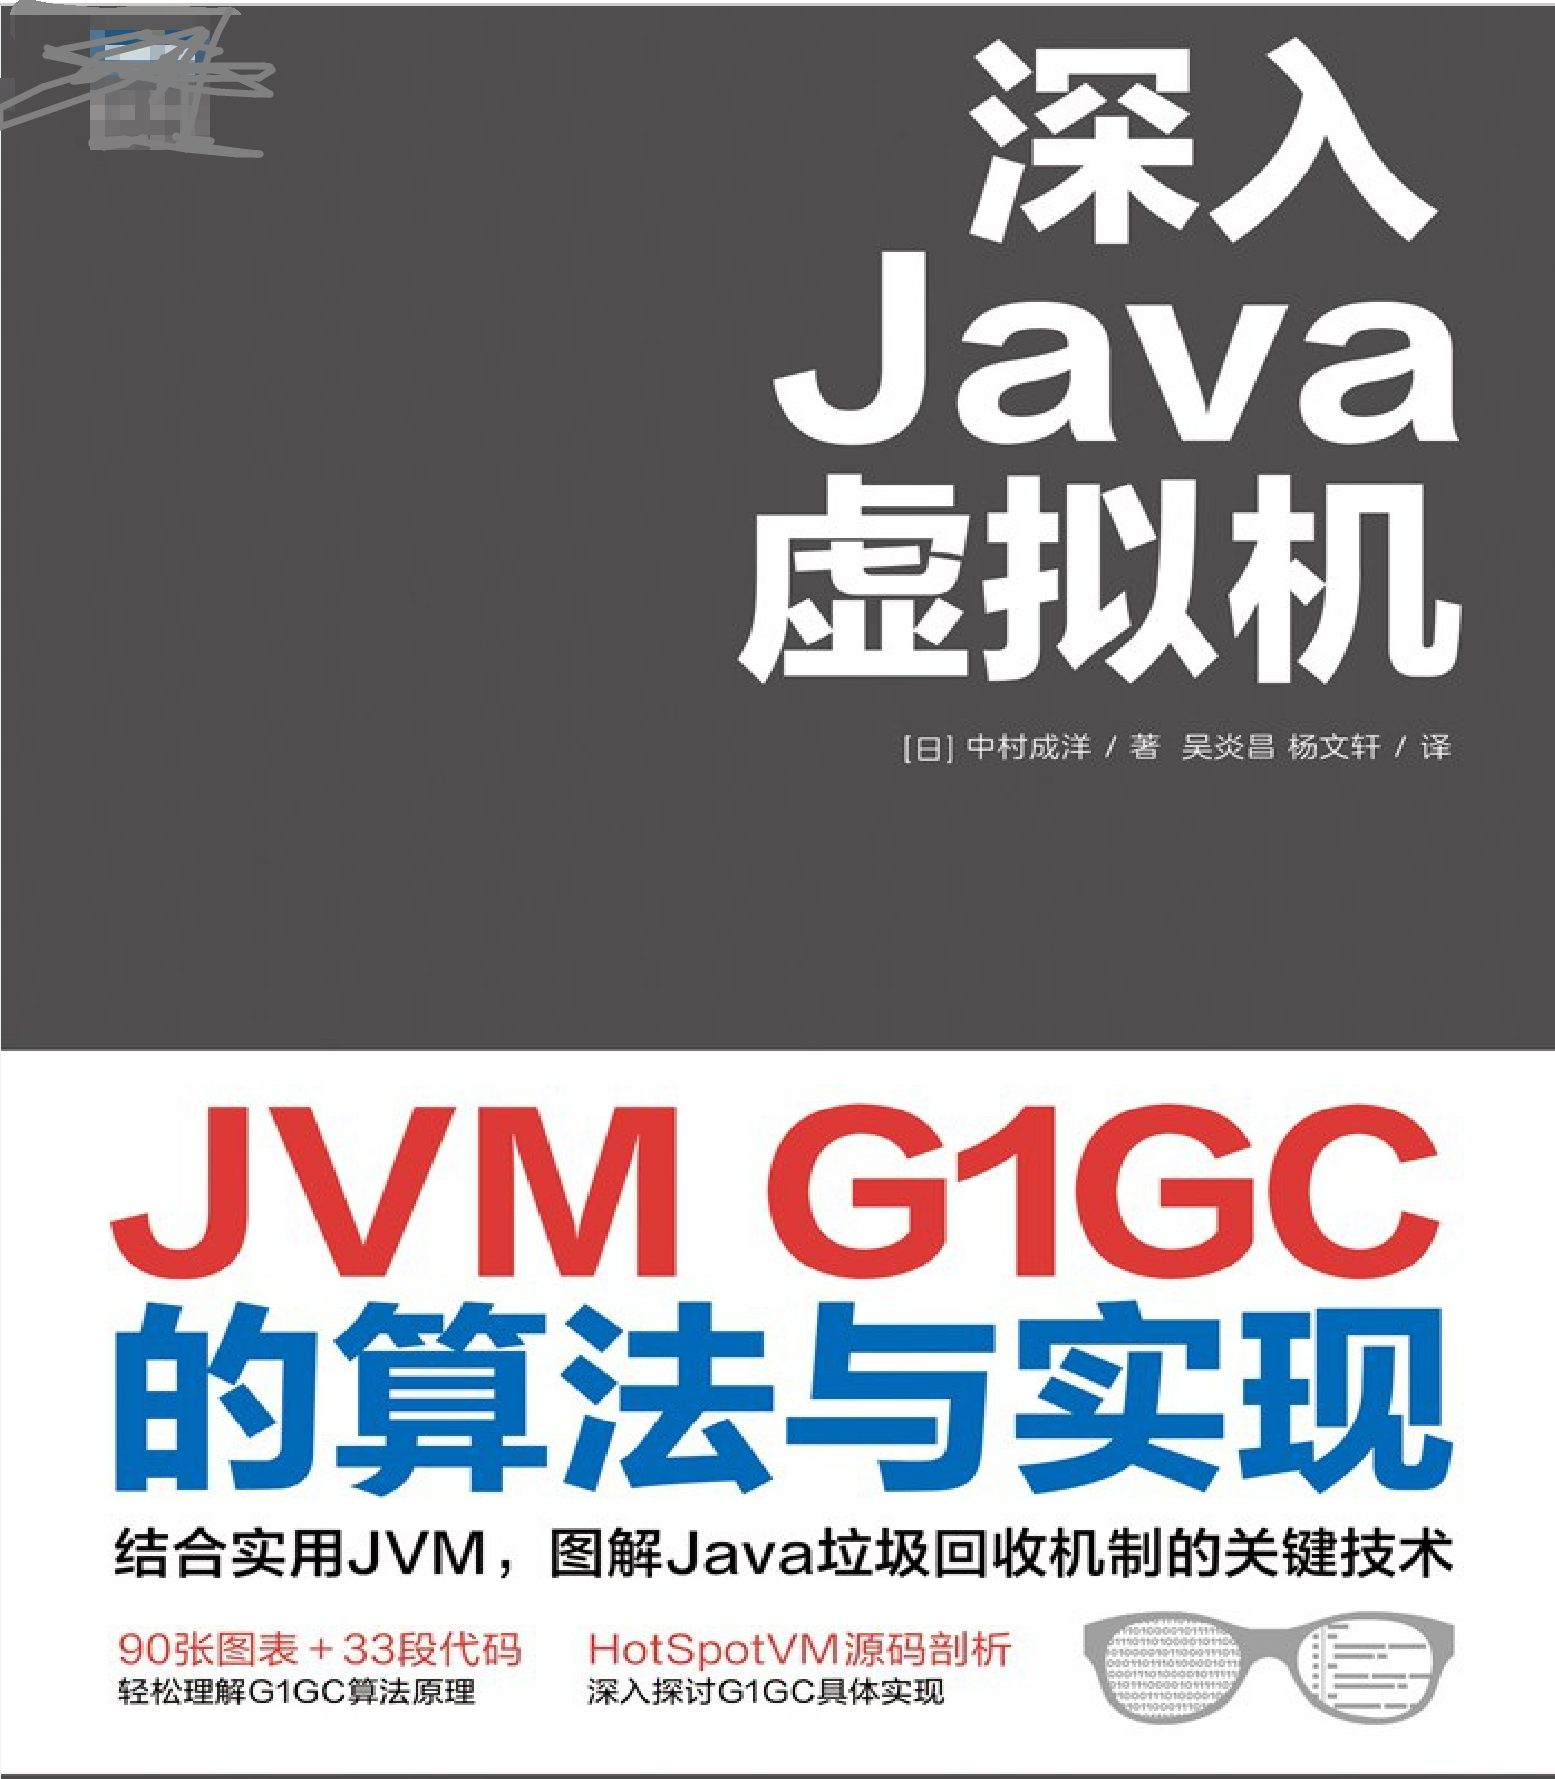 GitHub驚現！全網首份開源的深入理解JVMG1GC的算法與實現手冊